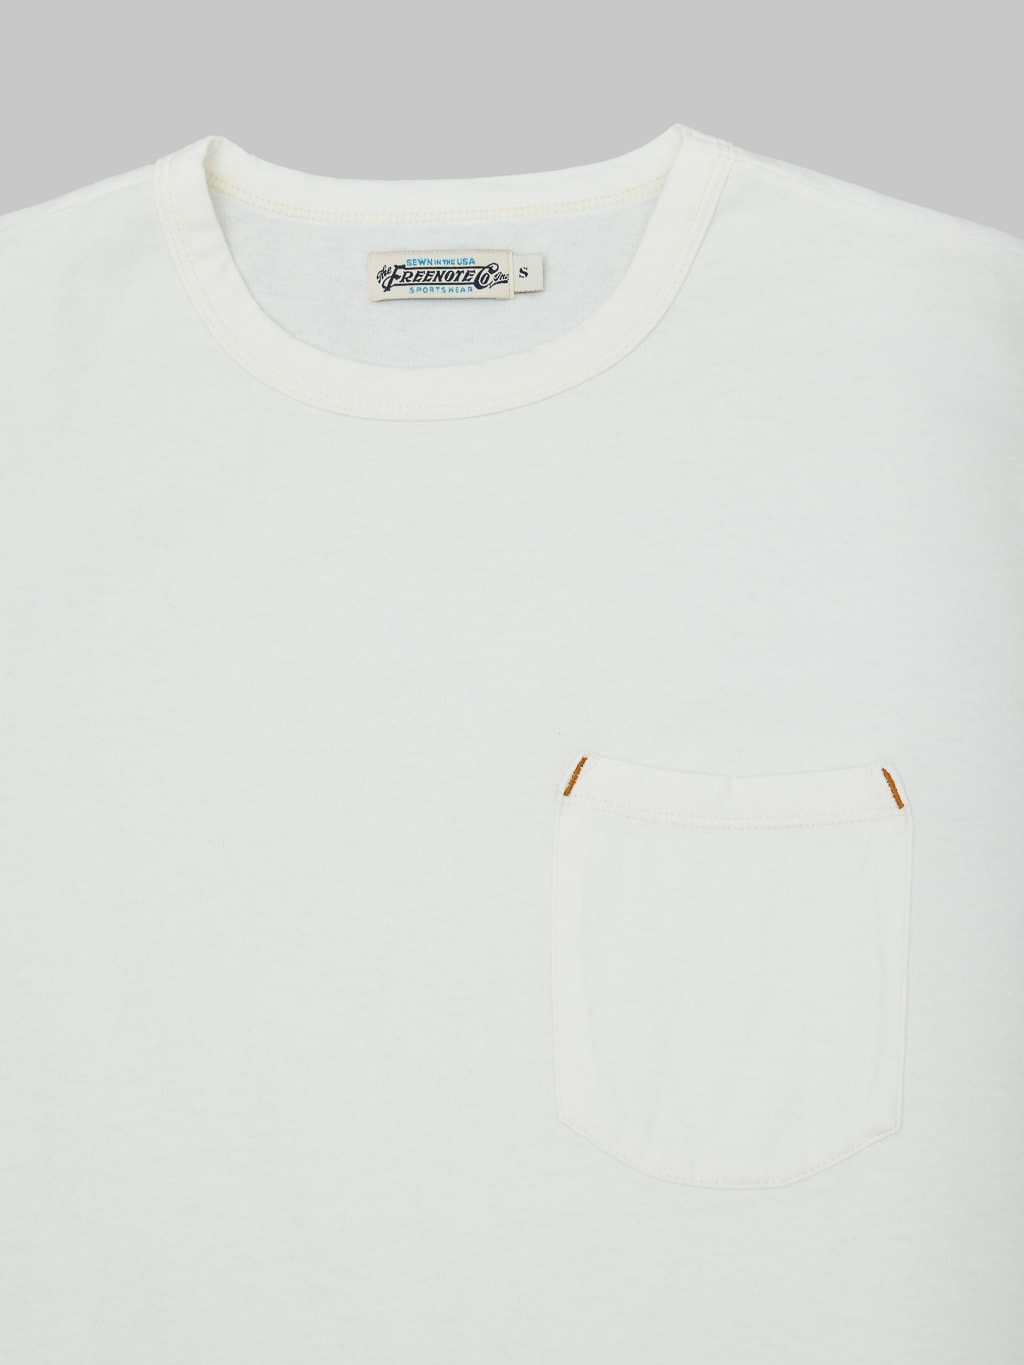 freenote cloth 9 ounce pocket t shirt white front pocket